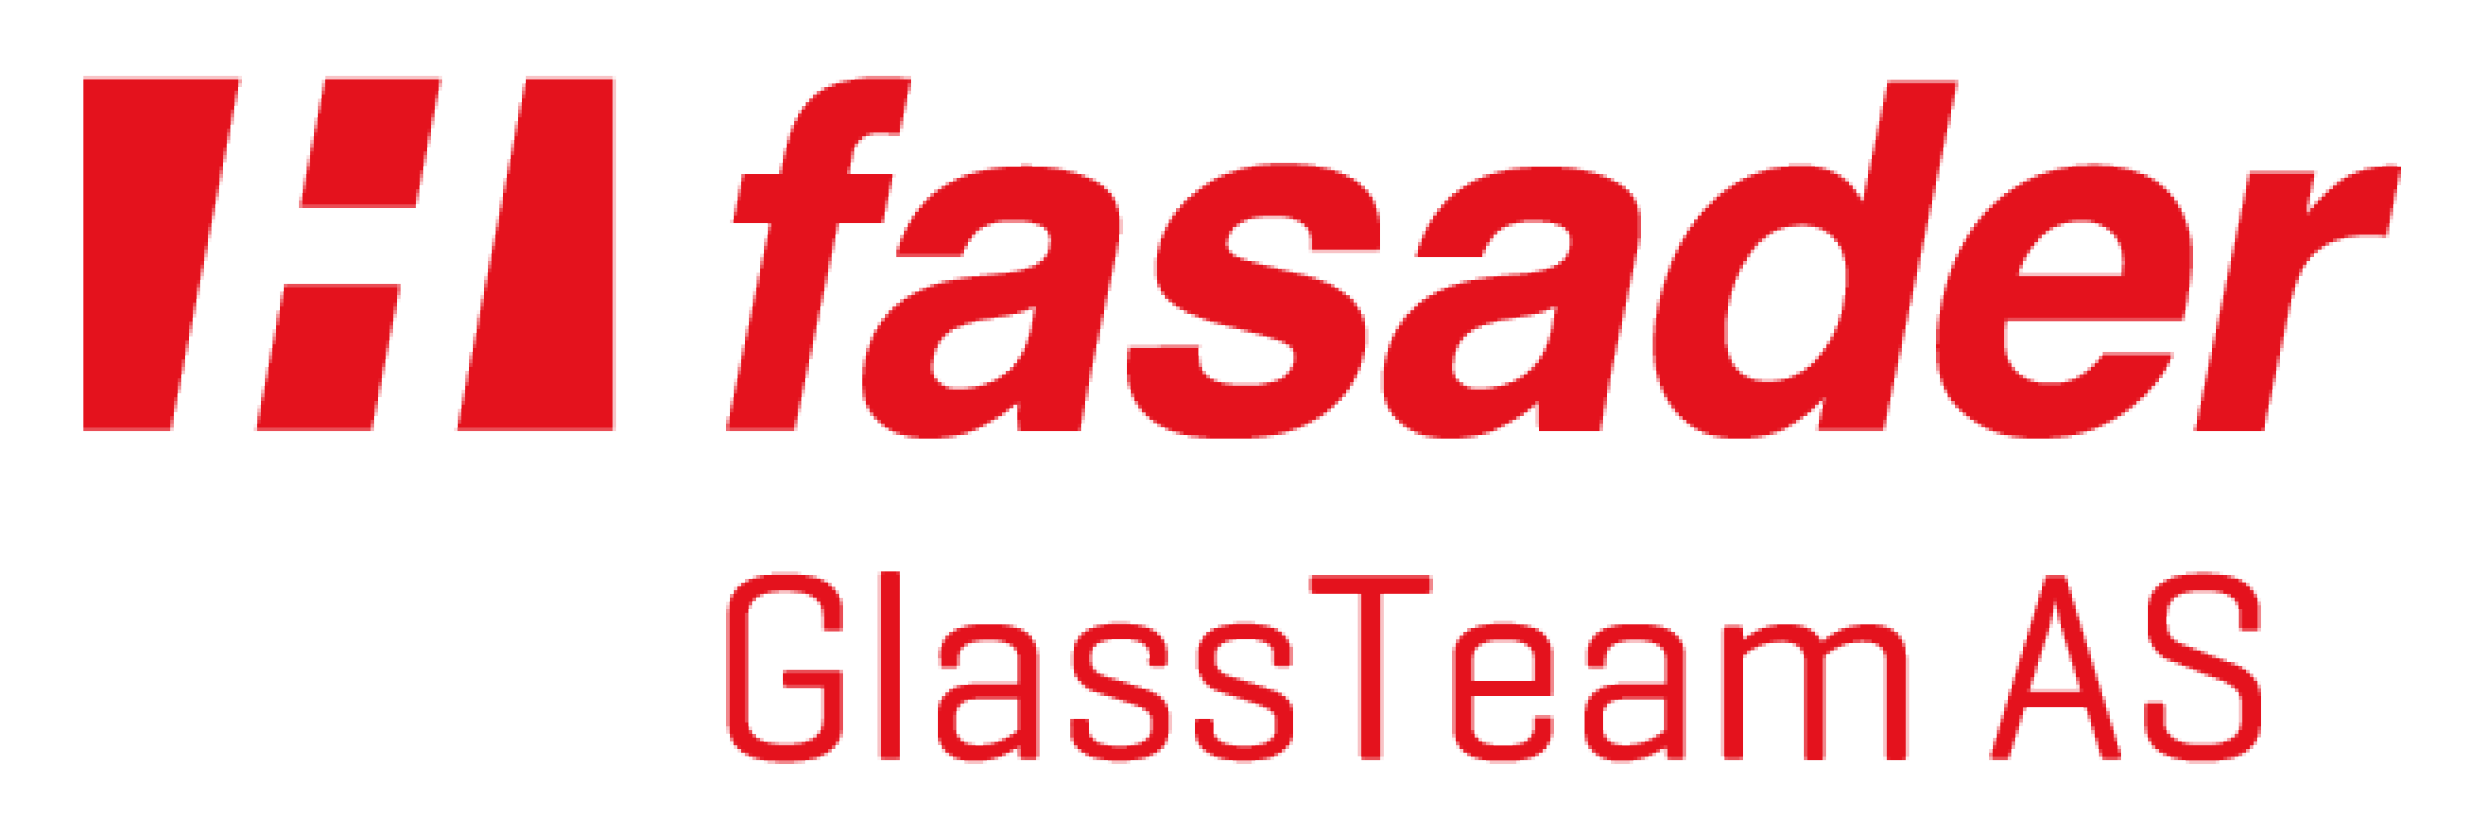 Glassteam.png